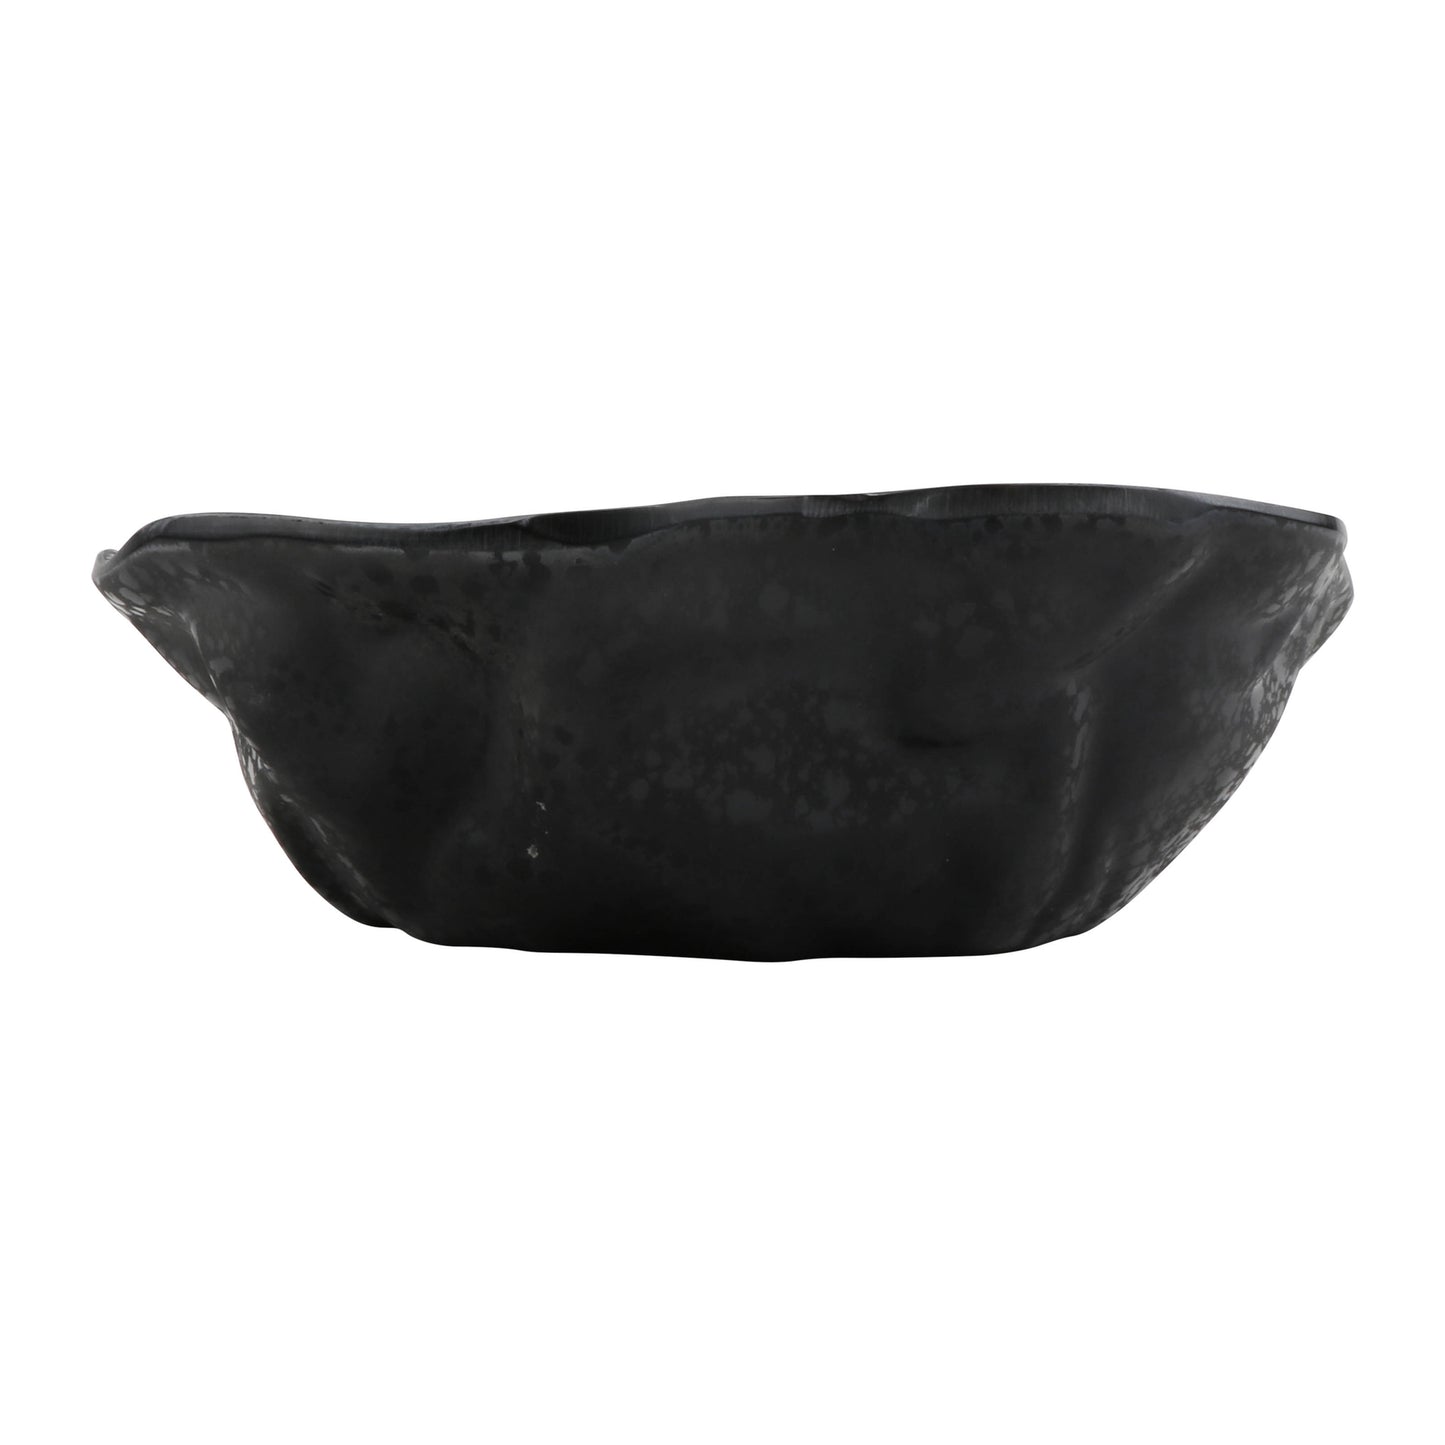 23.67 oz rainex showered black medium melamine bowl, 7.5"L x 7.5"W x 1.5"H, GET, cheforward